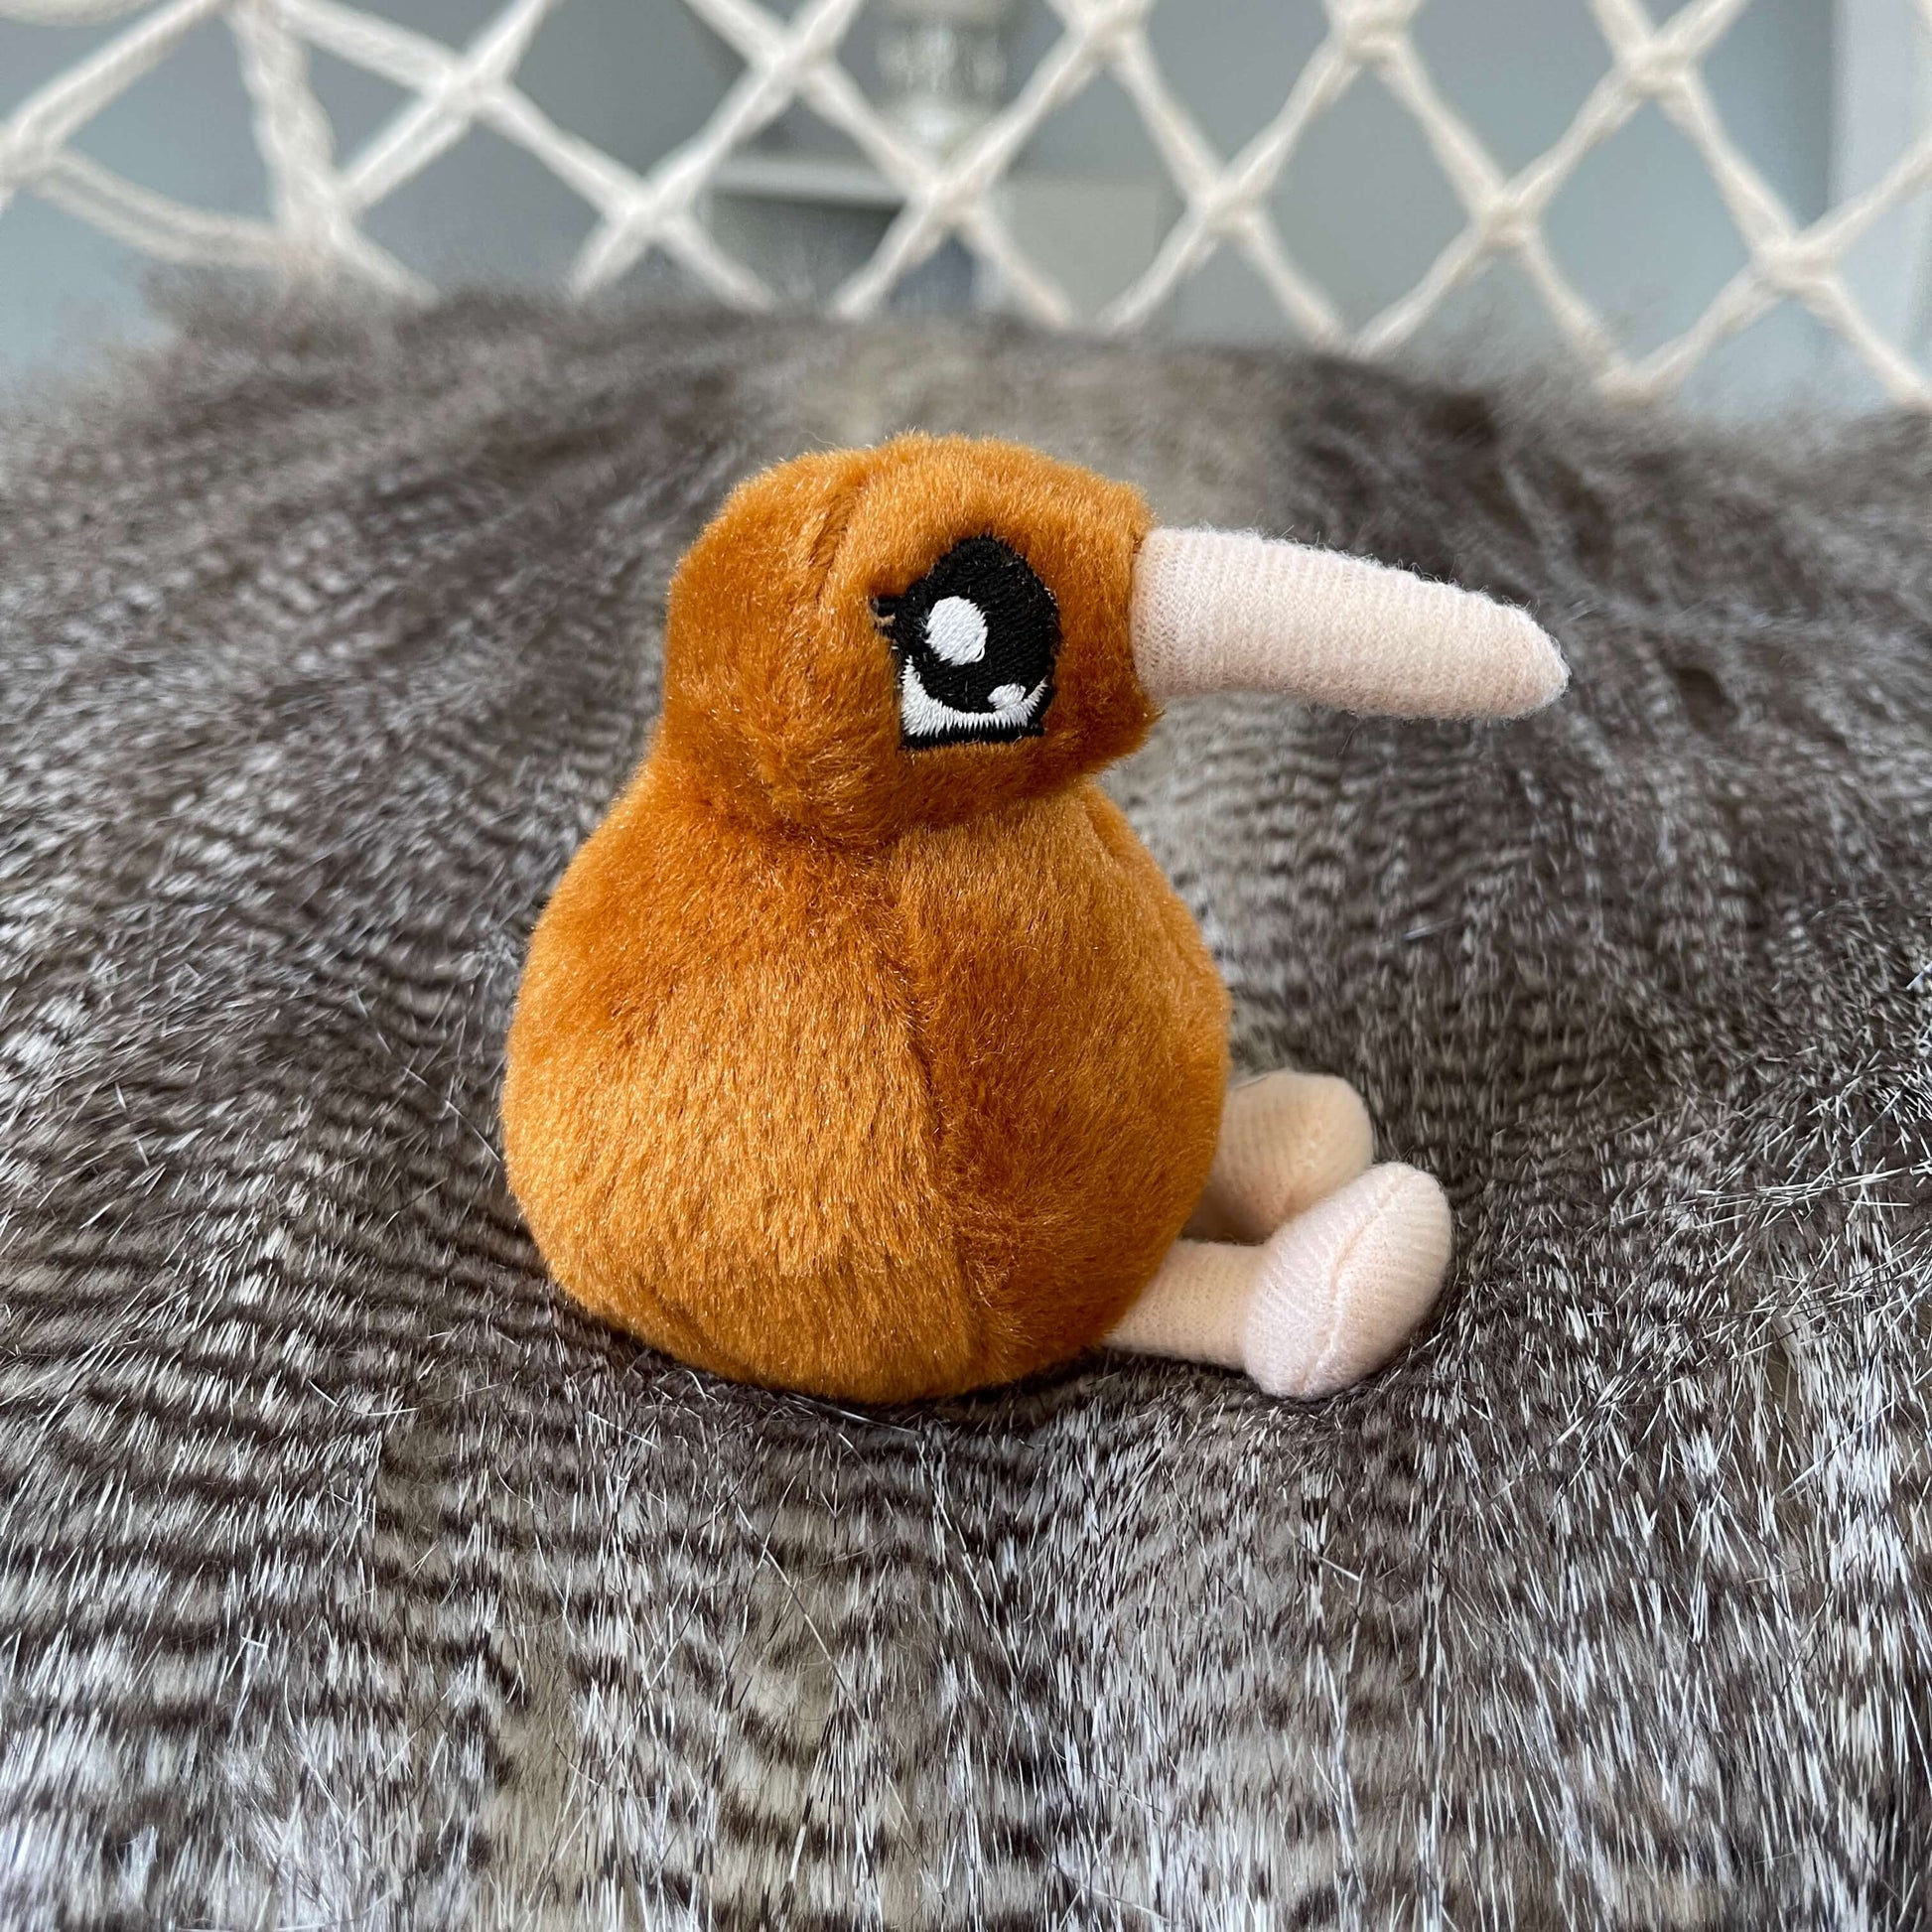 Mini kiwi plush toy in light brown with beige beak and feet.